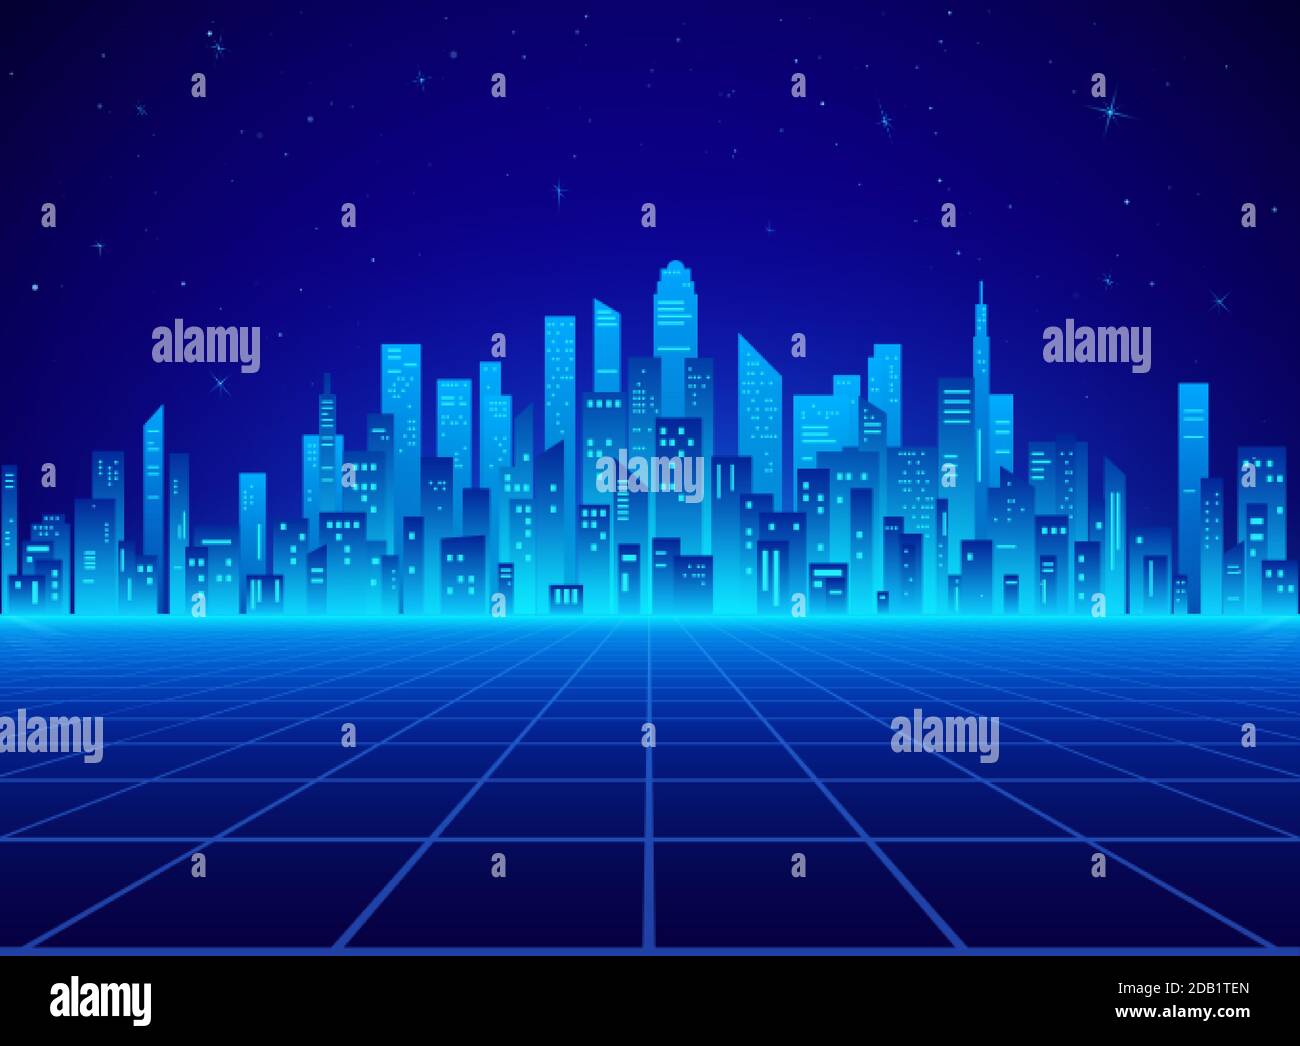 Neon retro city landscape in blue colors. Cyberpunk futuristic town. Sci-fi background abstract digital architecture. Vector illustration Stock Vector